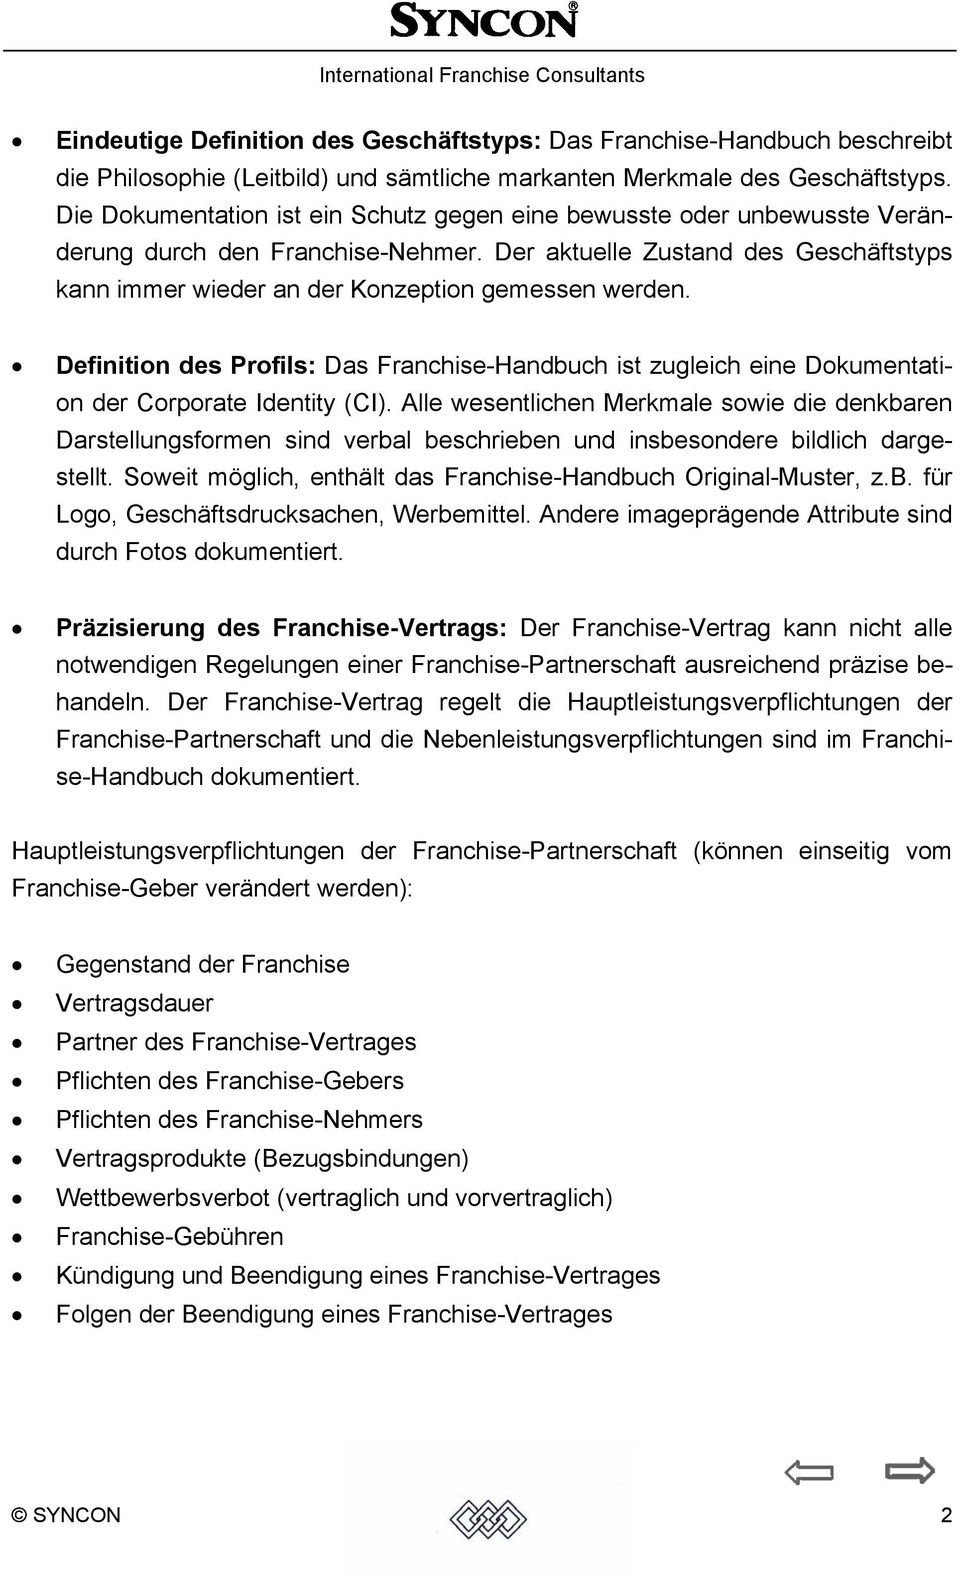 Checkliste Franchise Handbuch Pdf Free Download